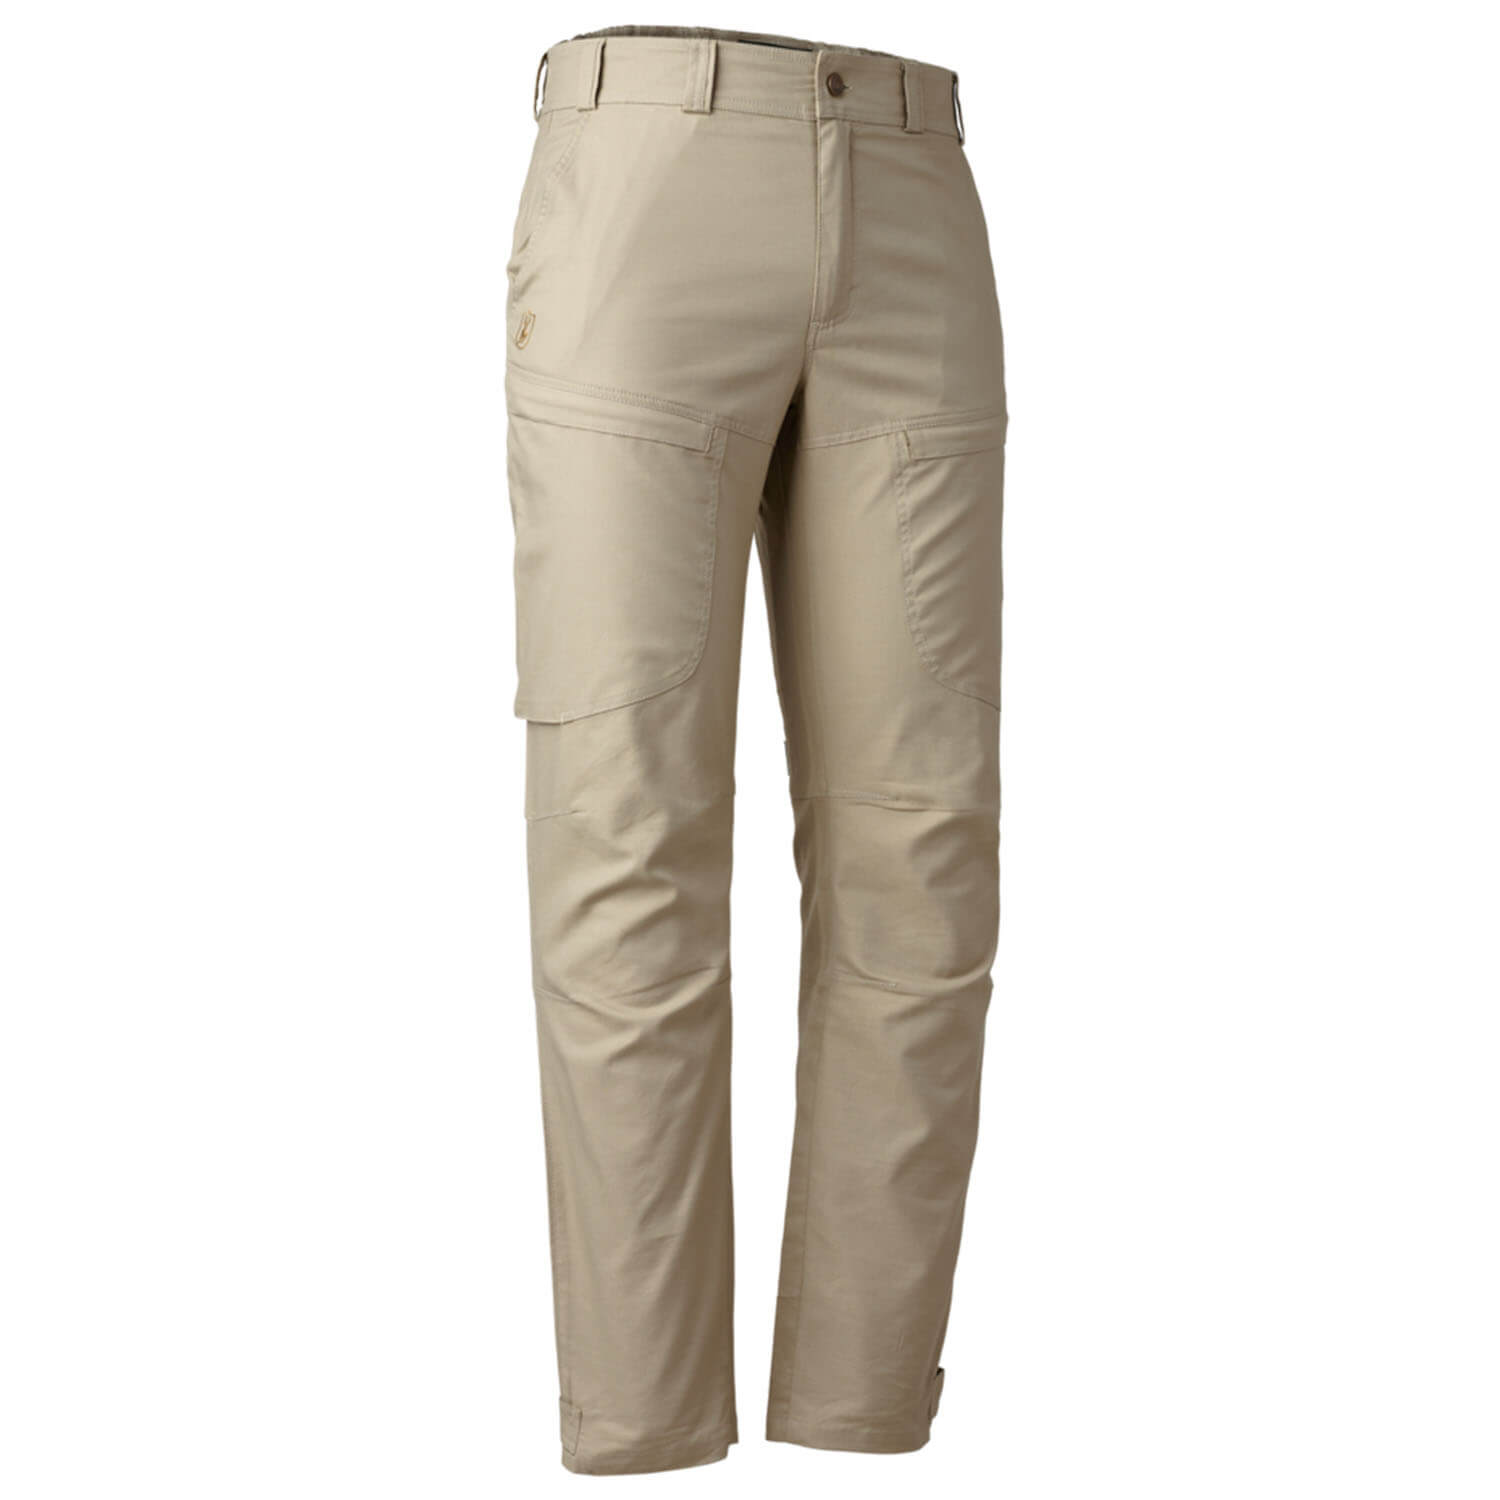 Deerhunter Trousers Matobo (beige) - Hunting Trousers